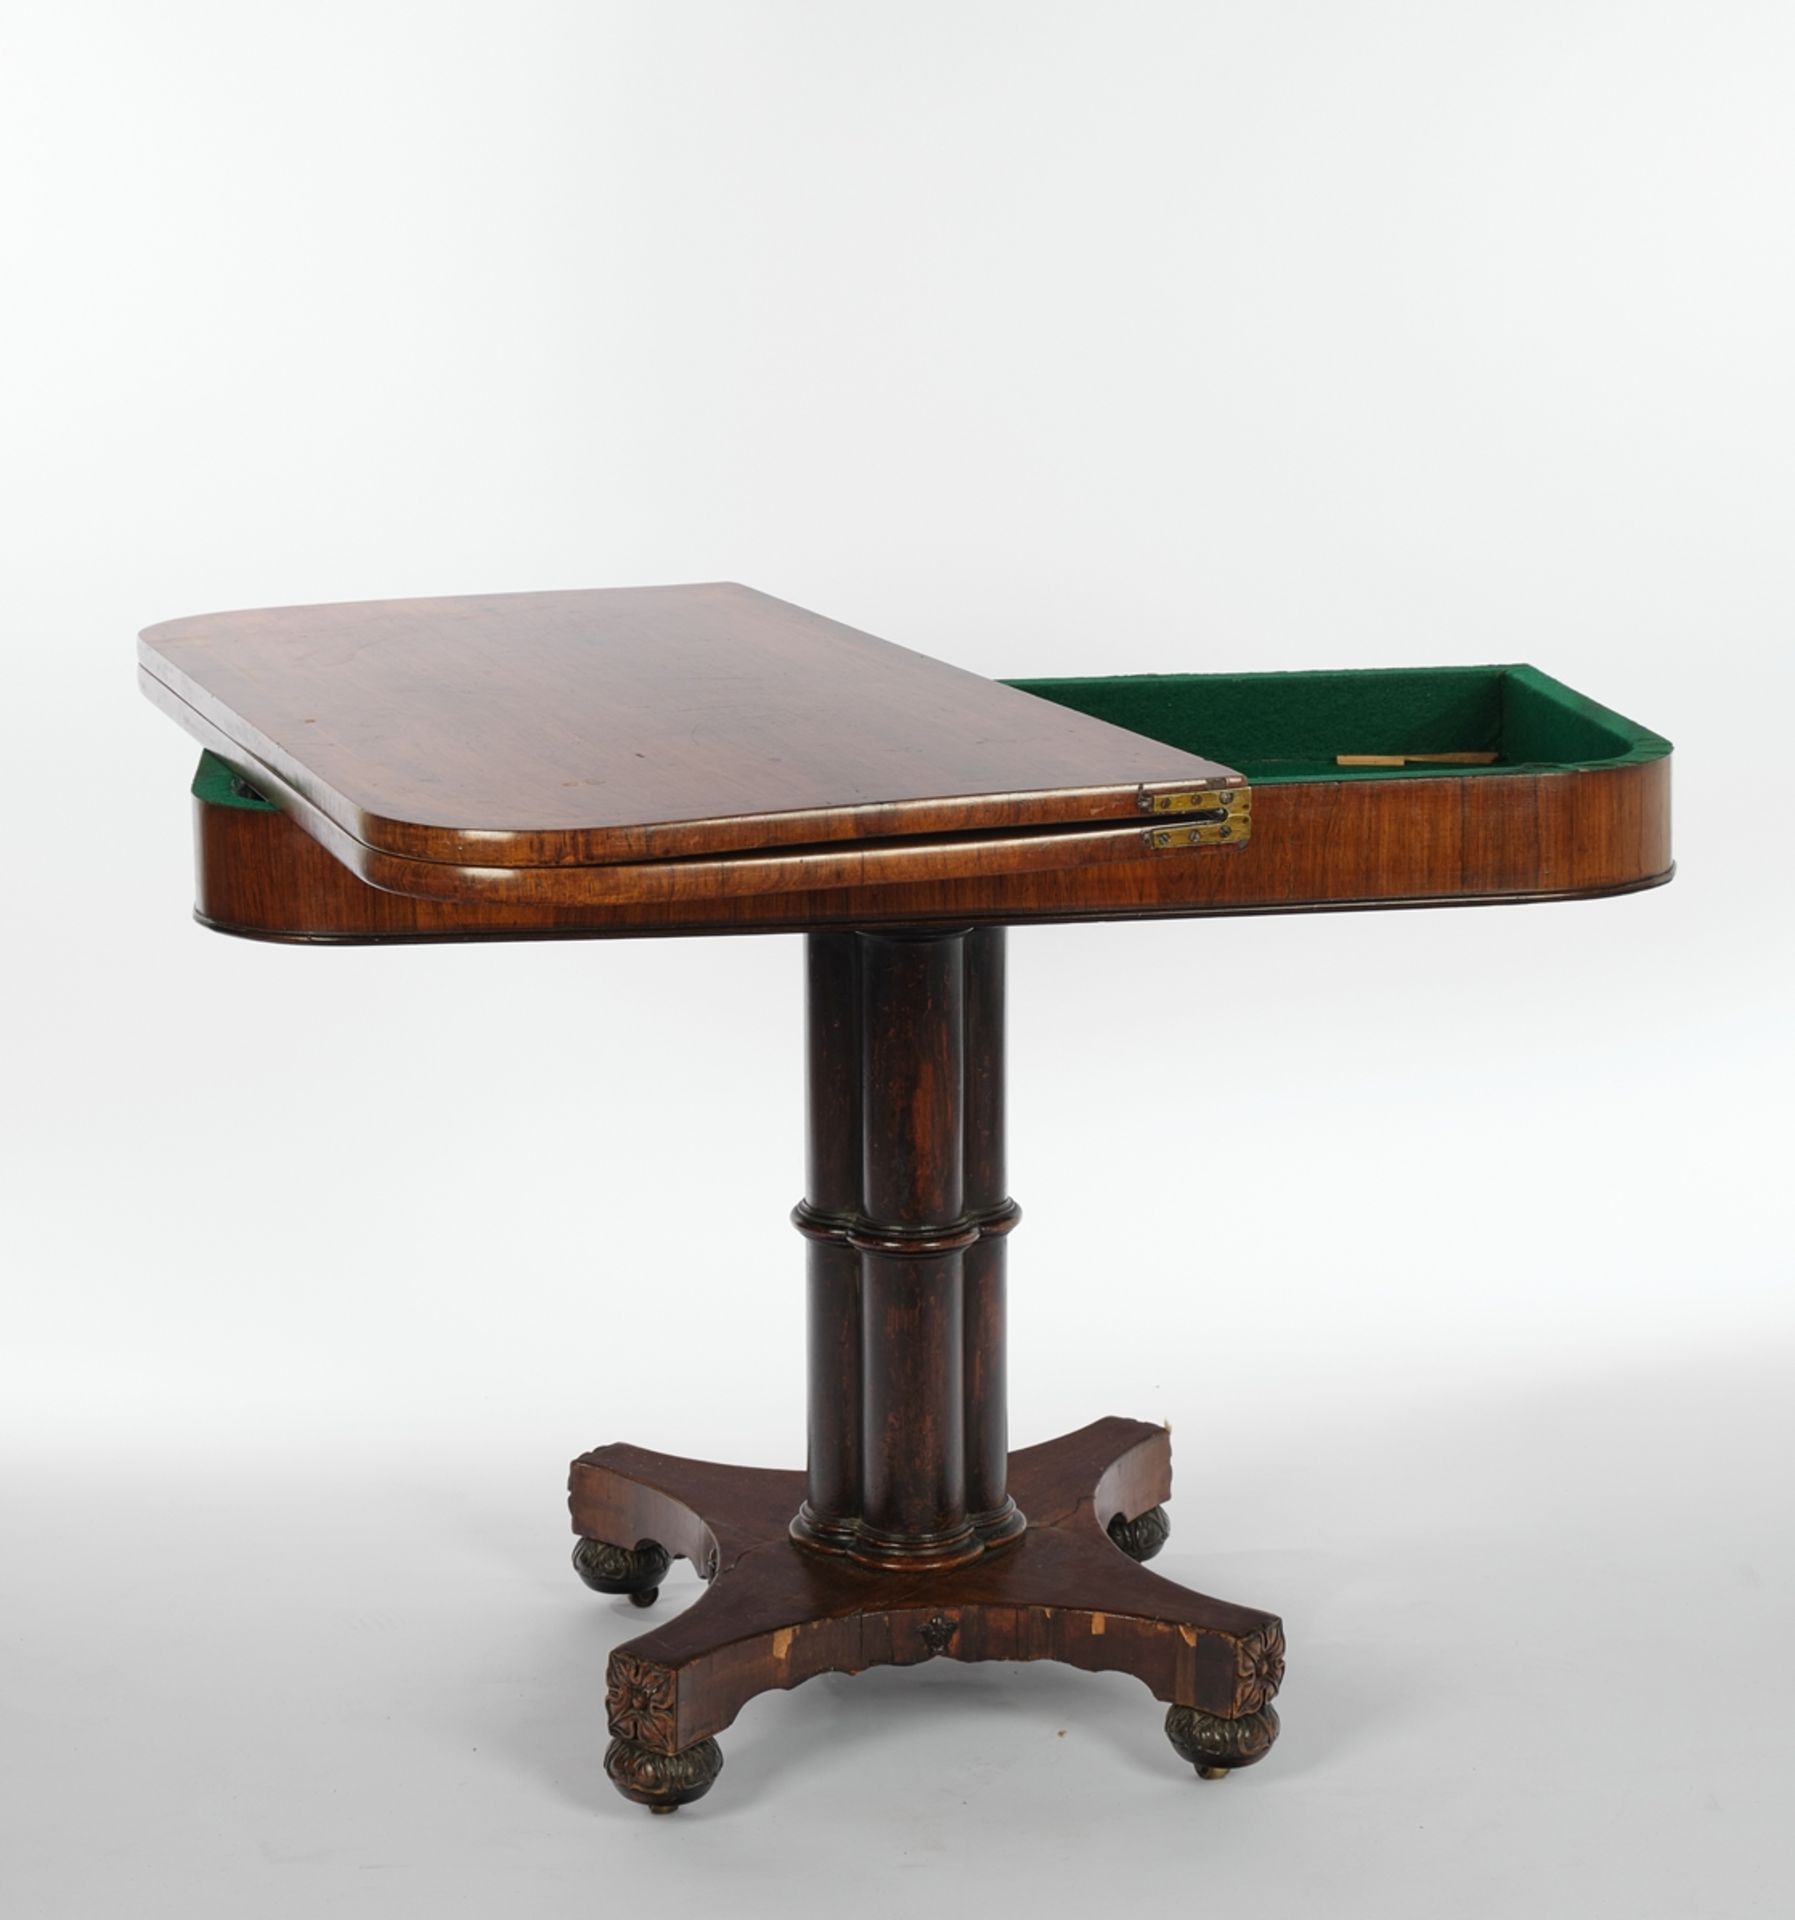 Spieltisch / Konsoltisch, Biedermeier, um 1830, Mahagoni furniert, Fadeneinlagen, rechteckige Platt